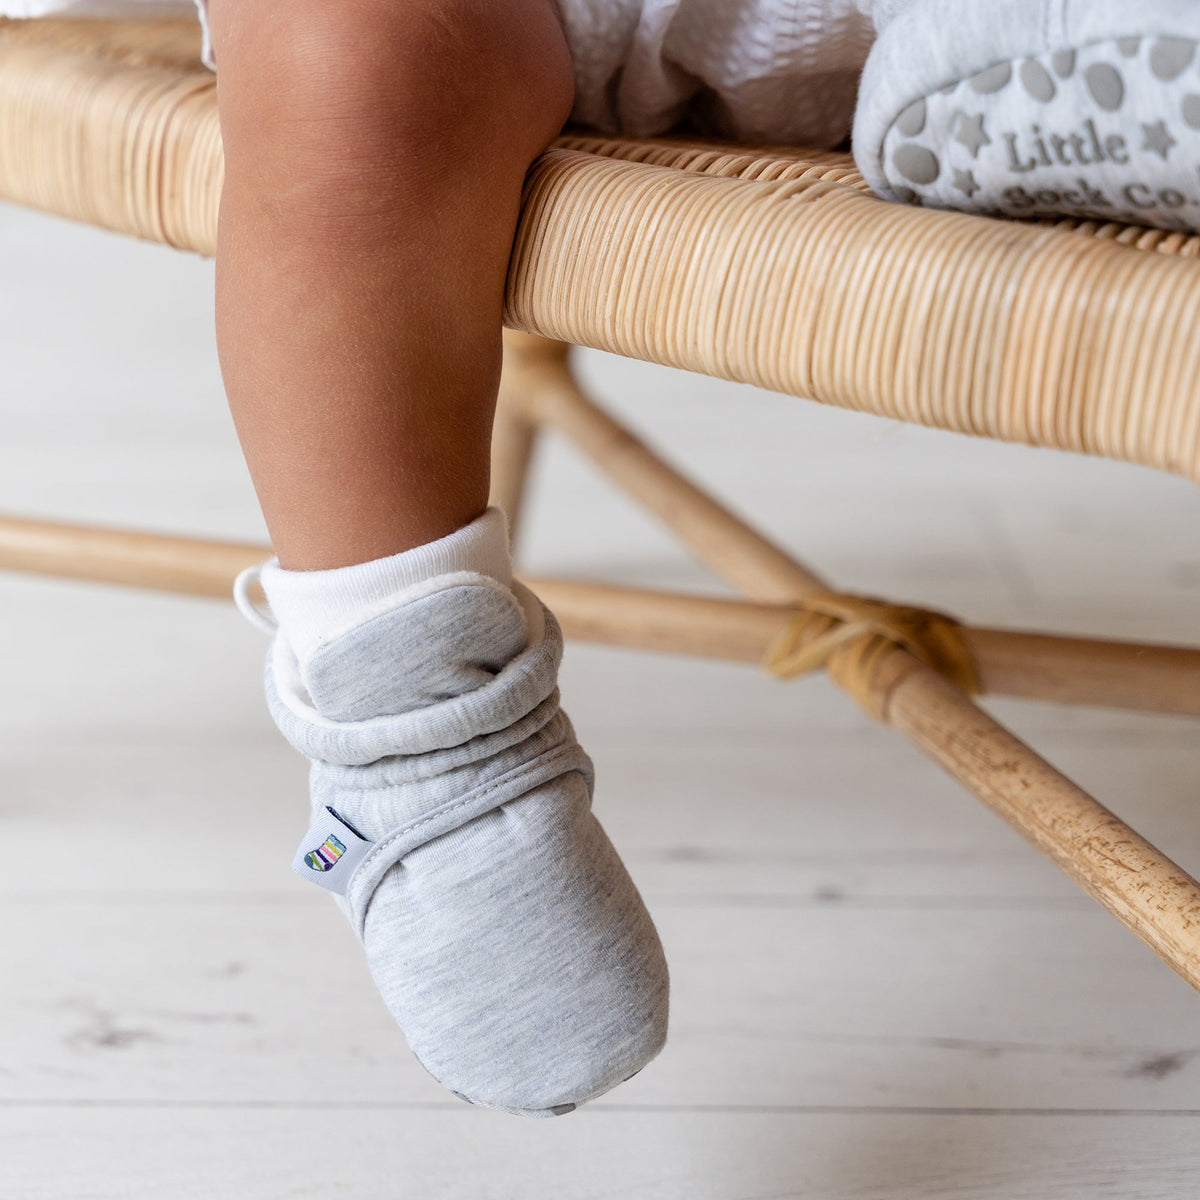 Newborn Stay-on Bootie Bundle - Booties + Leggings + Stay-on Socks - Grey